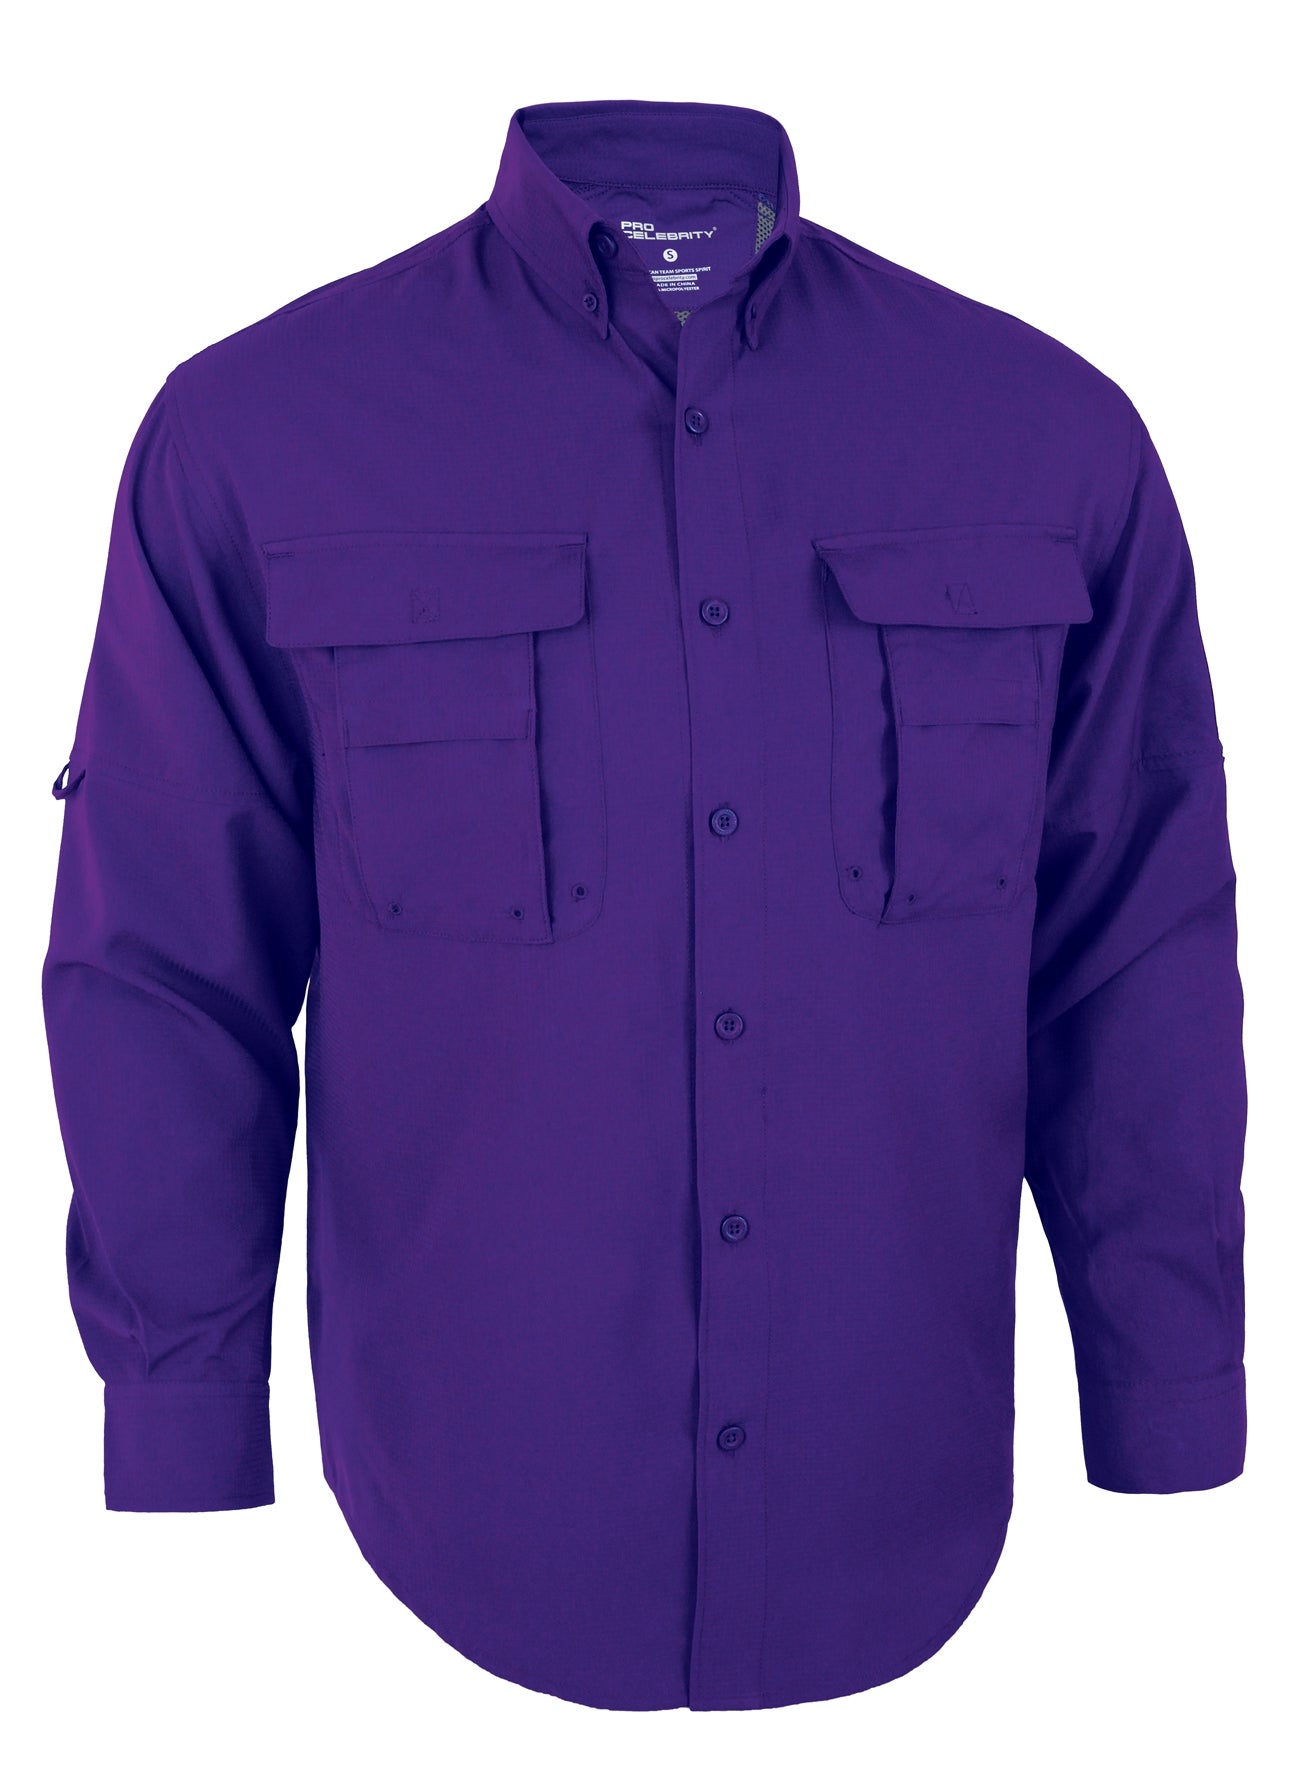 Mens long sleeve fishing shirt, purple